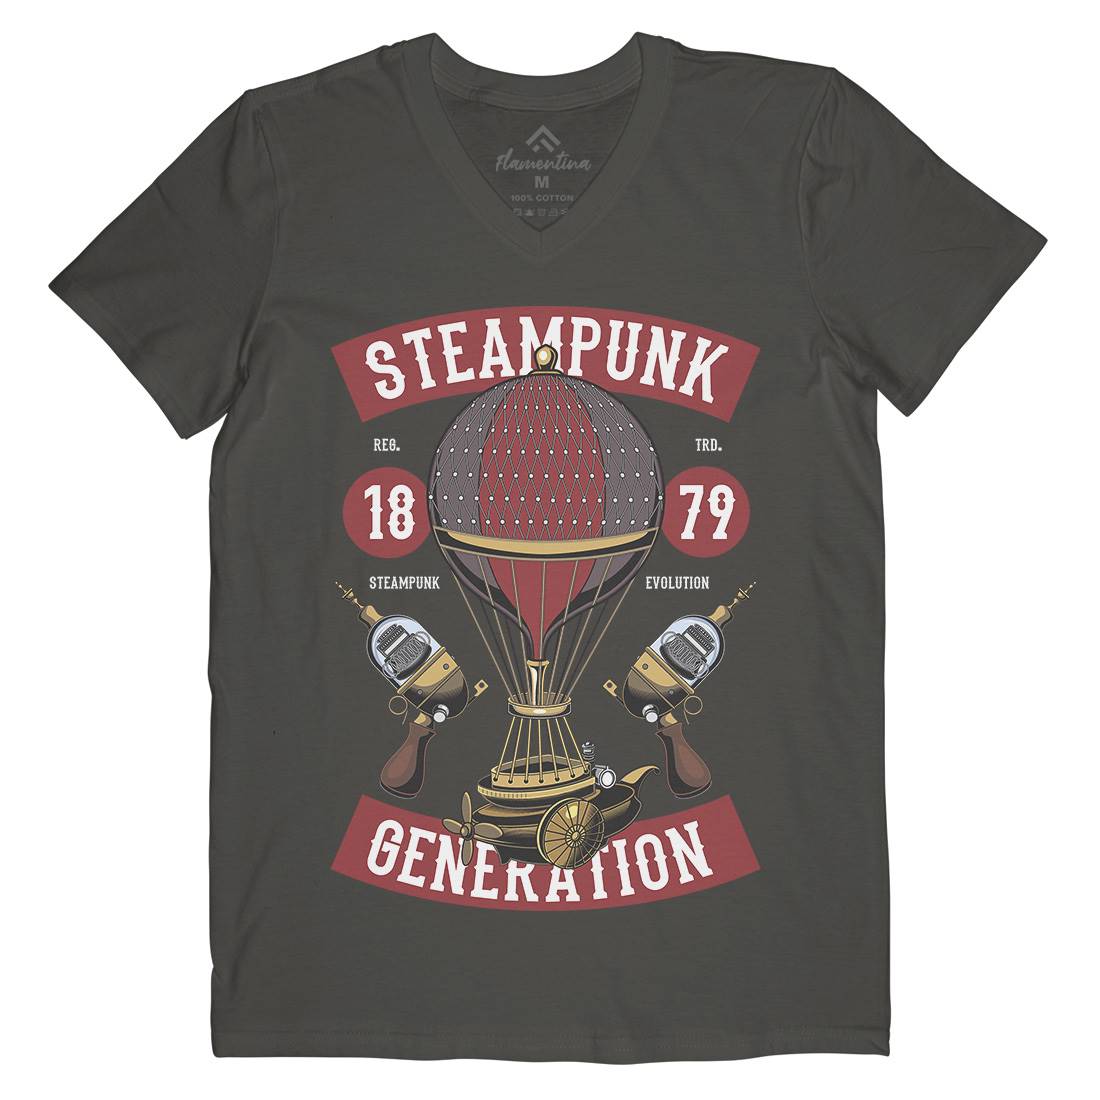 Generation Mens V-Neck T-Shirt Steampunk C449